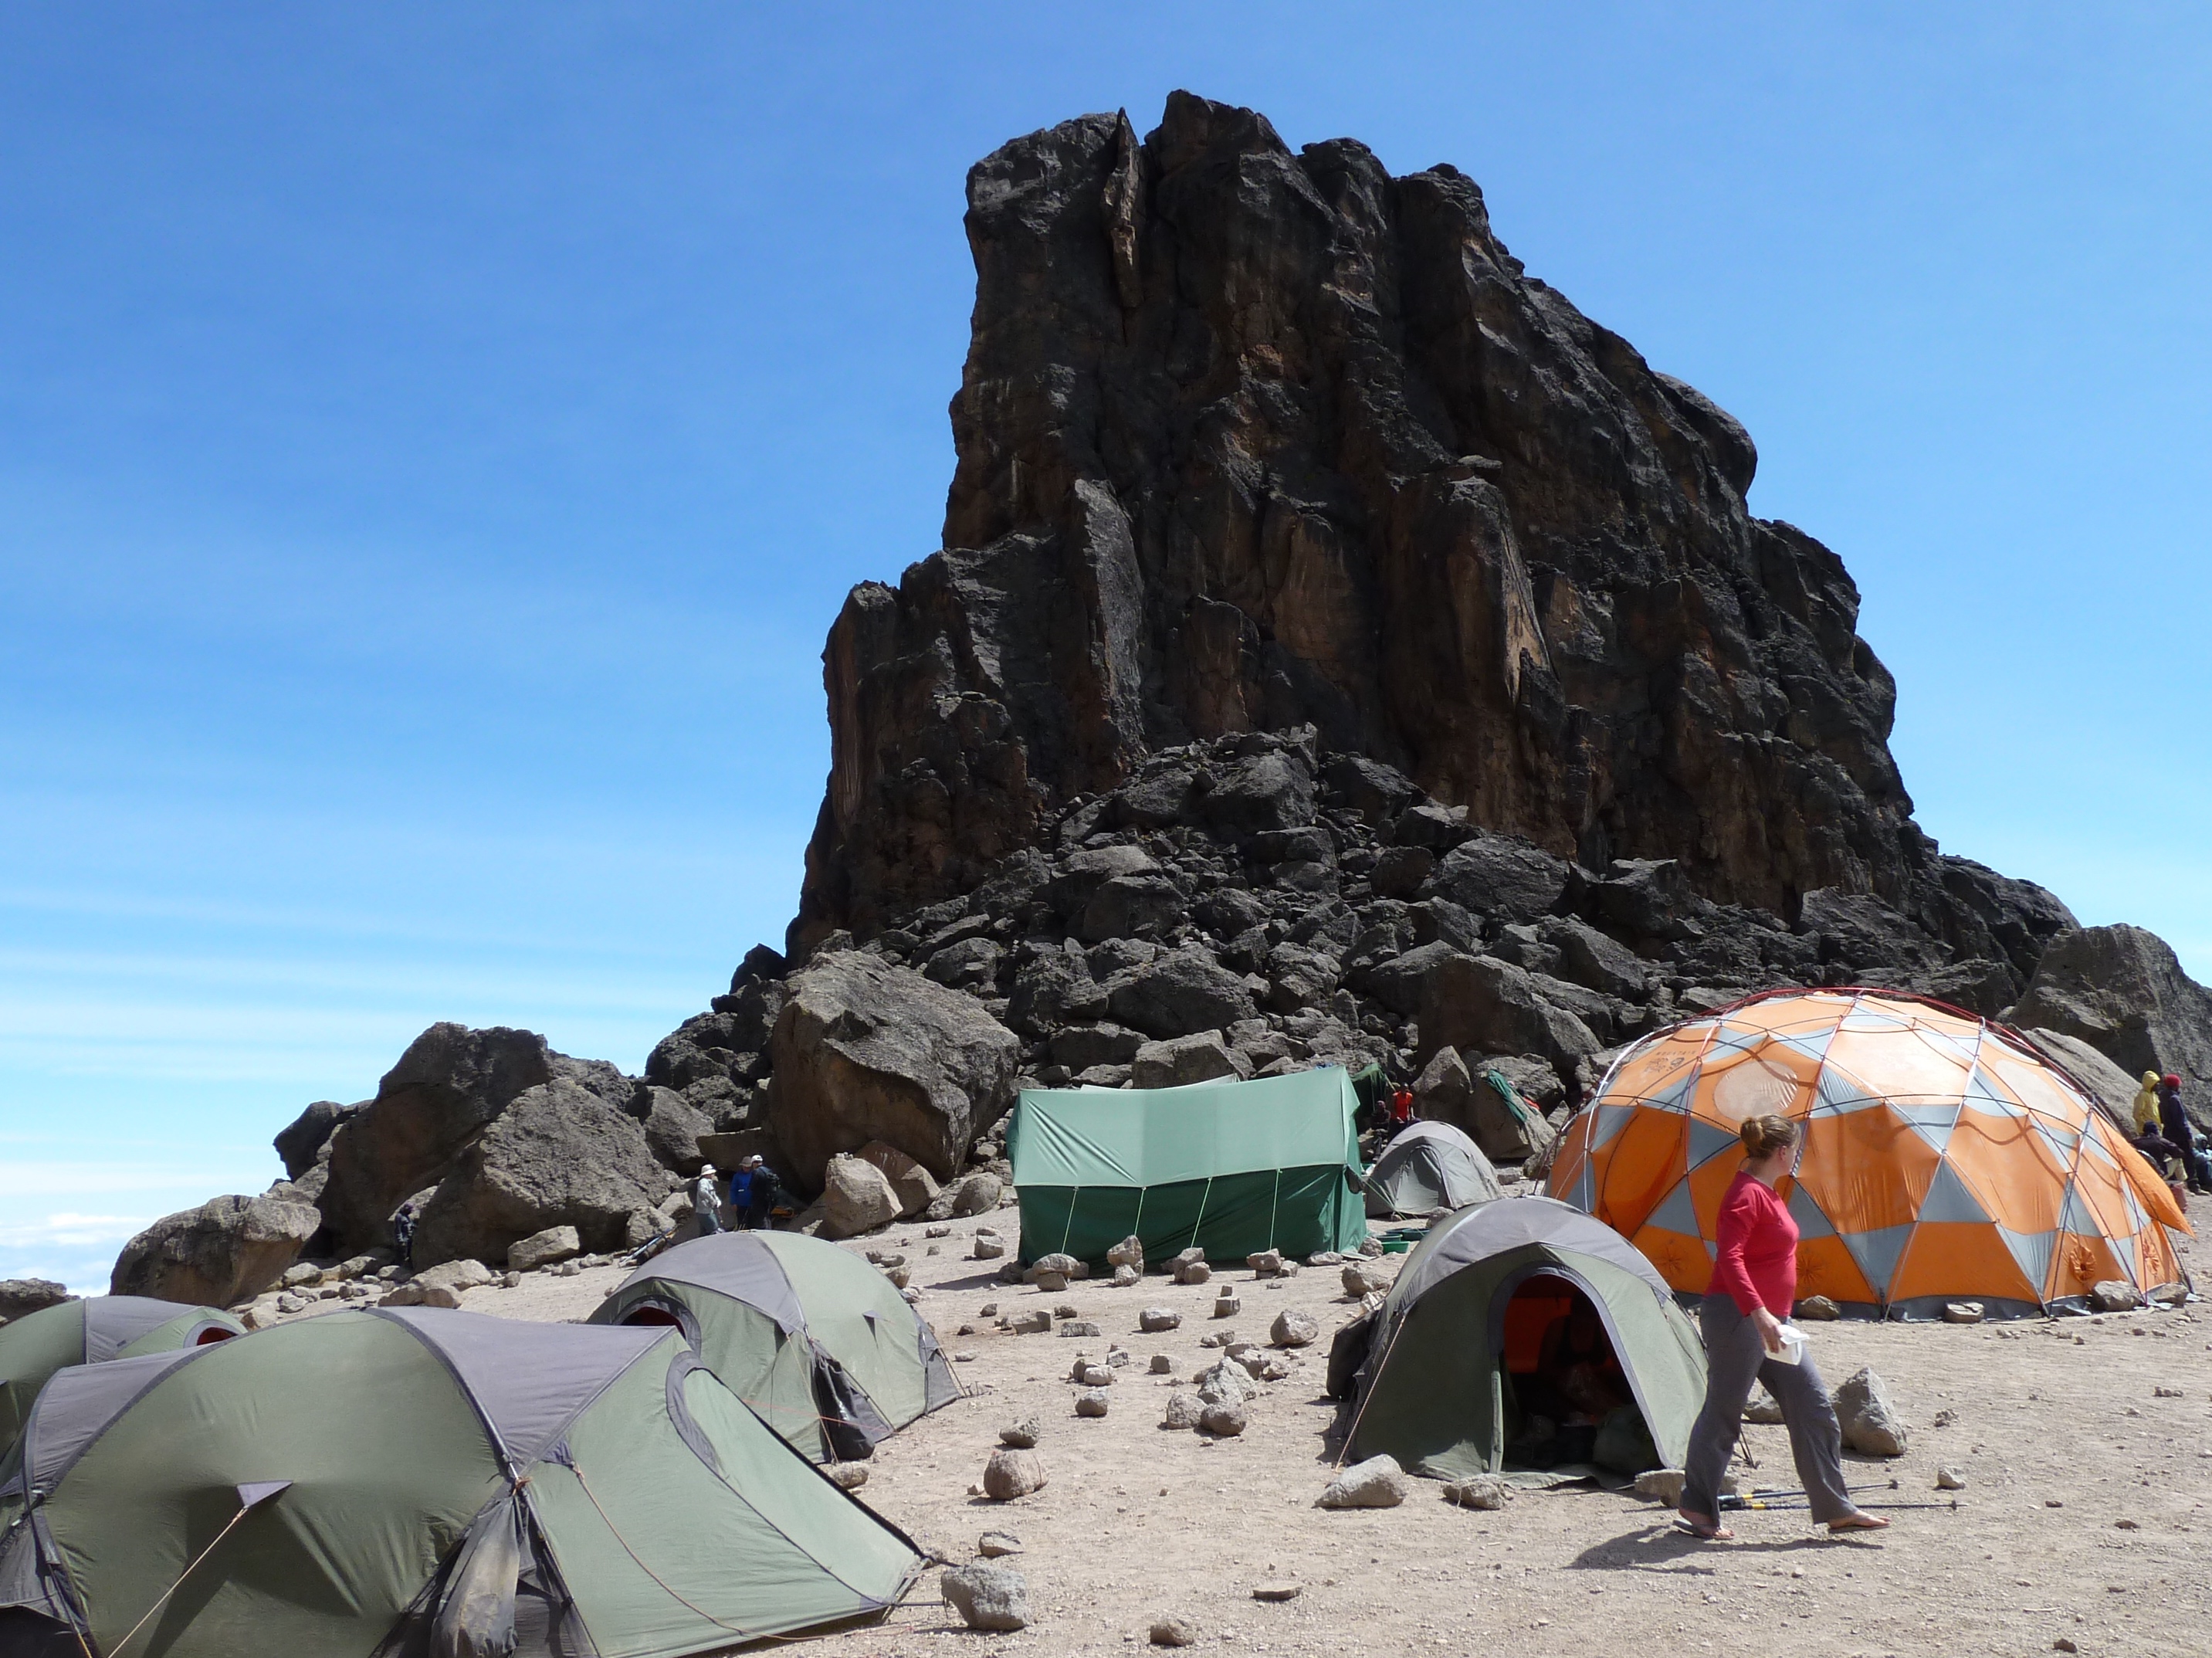 Mt Kilimanjaro - Lava Tower Campsite. www.gypsyat60.com